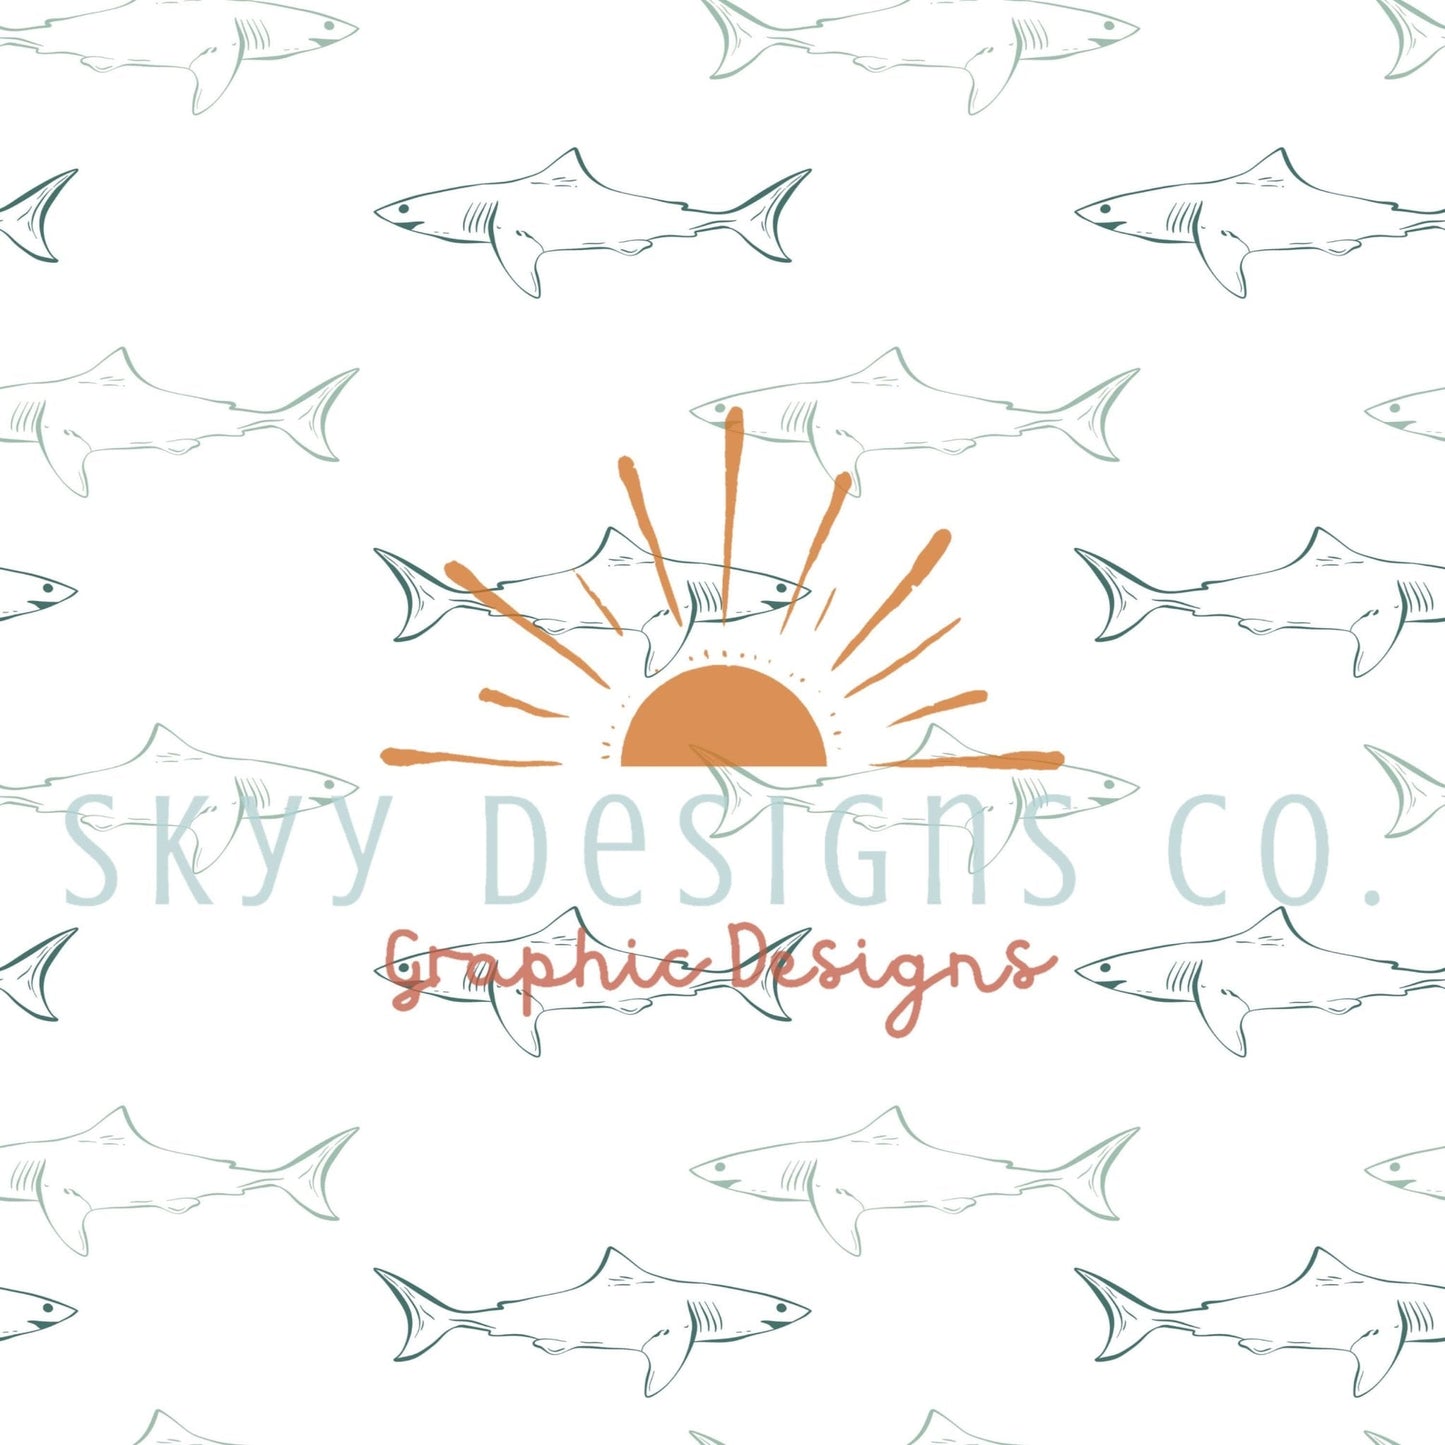 Beige sharks seamless repeat pattern - SkyyDesignsCo